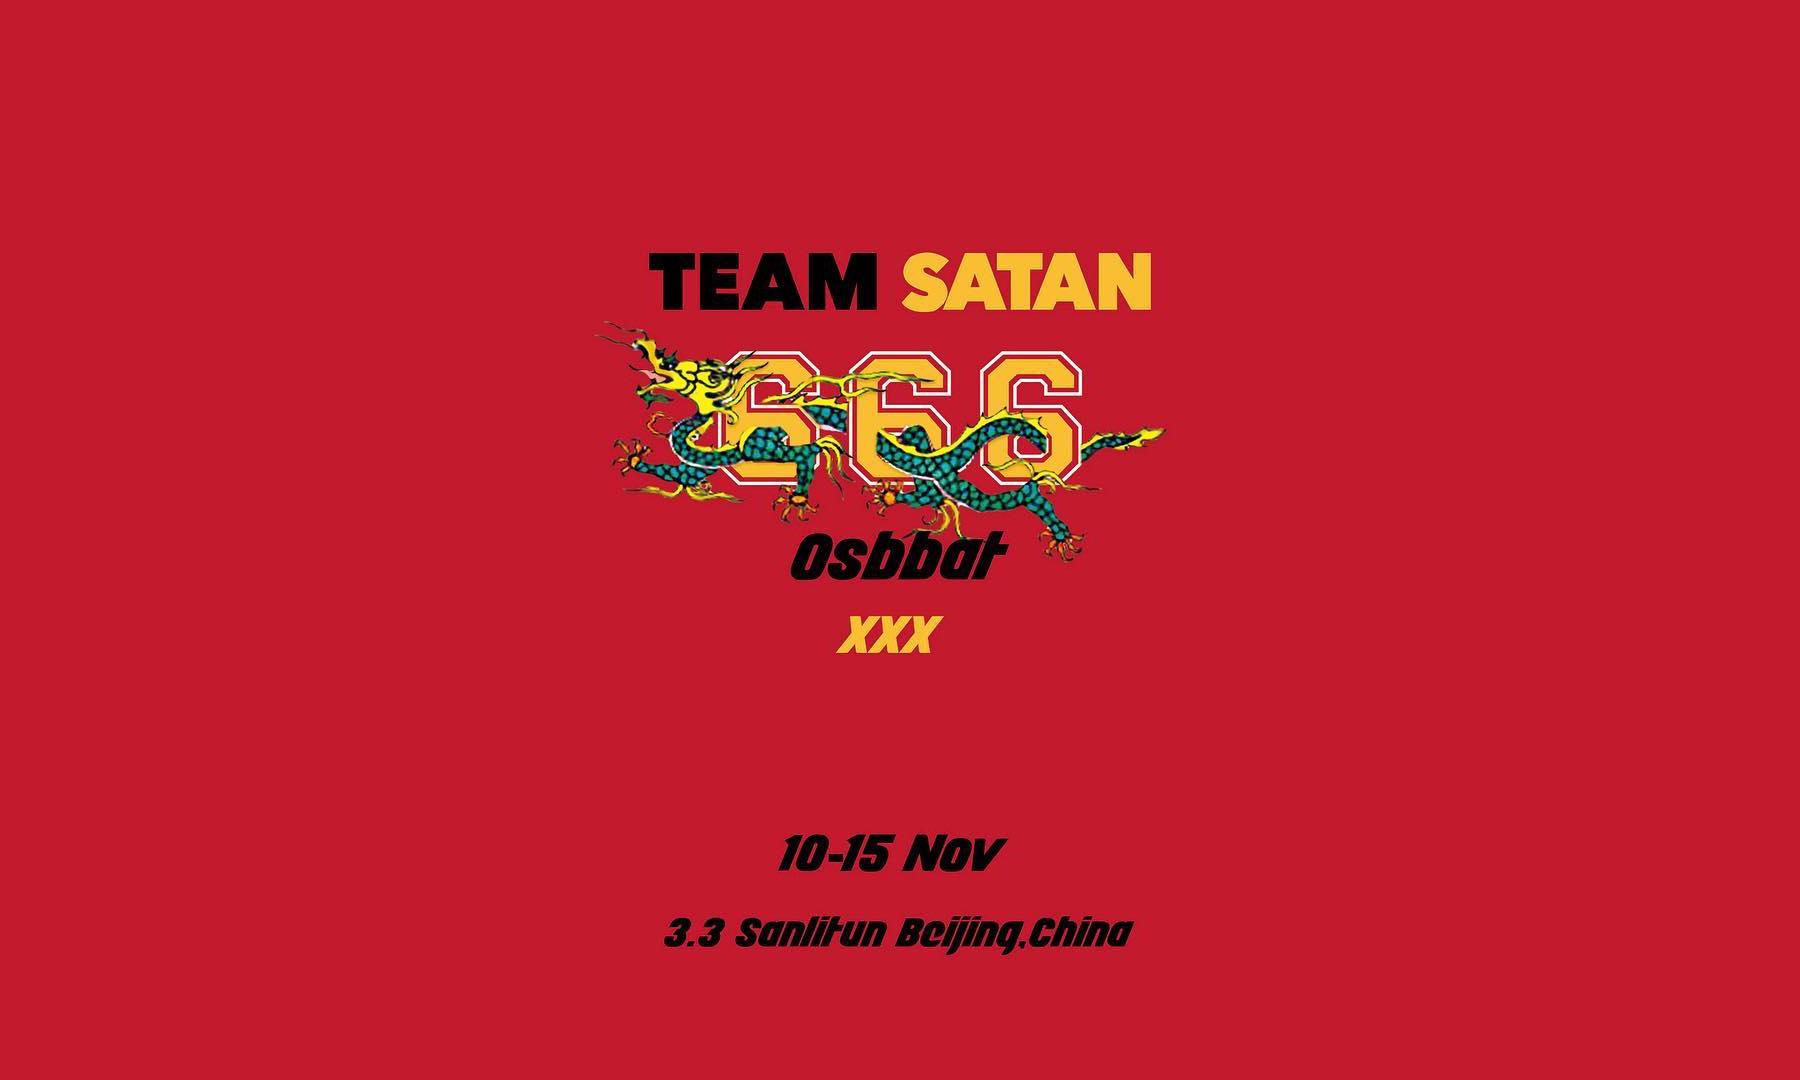 Team Satan by Ian Connor 即将登陆北京